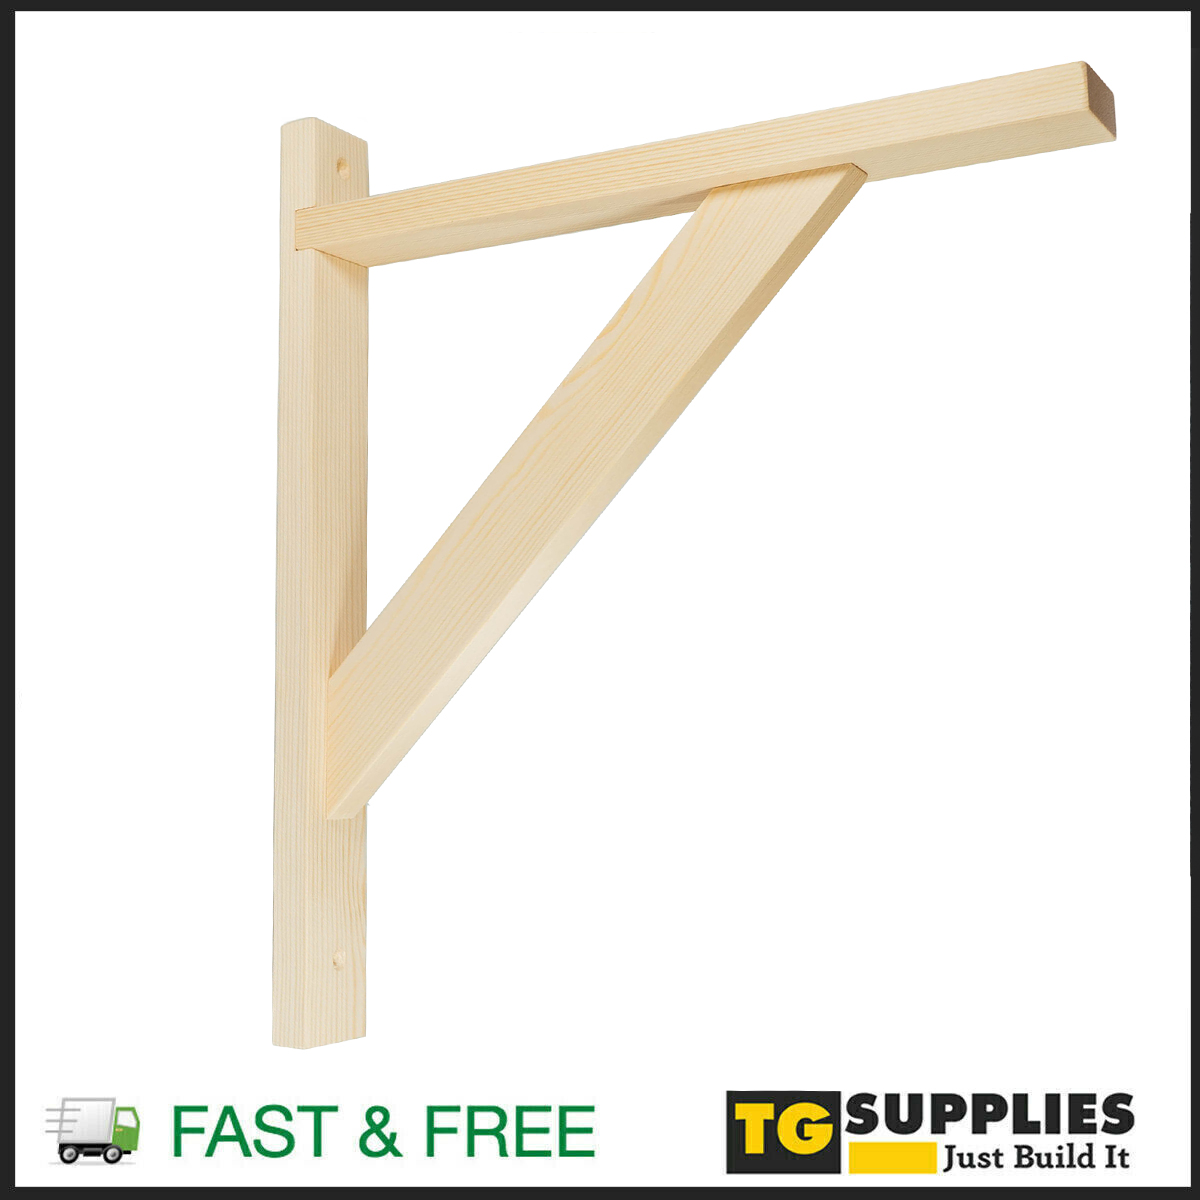 wooden shelf bracket, timber shelf bracket, shelf bracket, timber bracket, wooden bracket, wooden shelf fixings, wooden shelf support